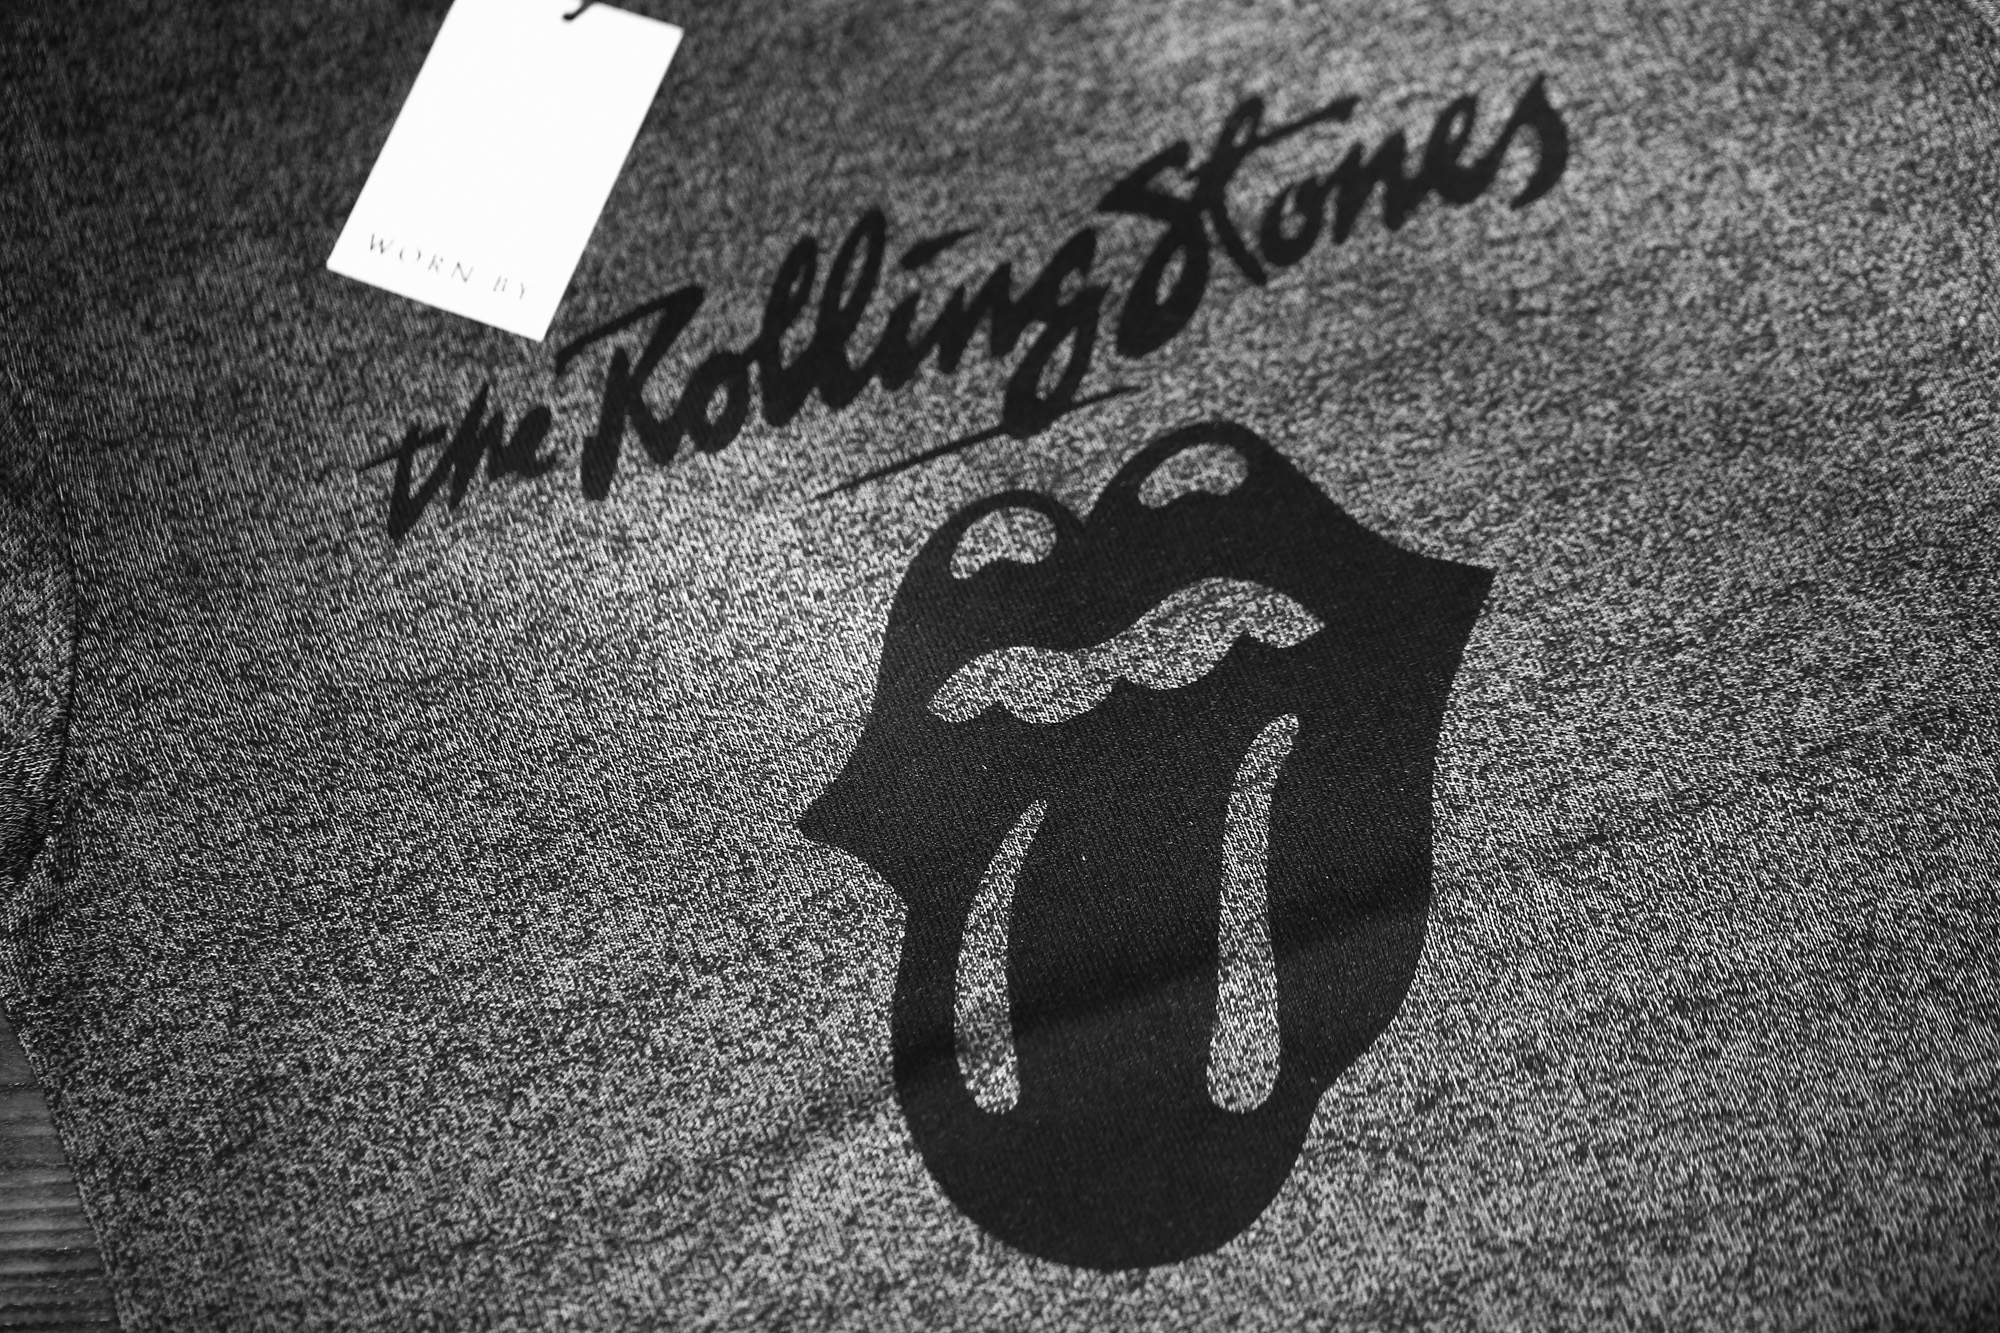 Worn By (ウォーンバイ) 40 LICKE The Rolling Stones ザ・ローリング・ストーンズ Forty Licks フォーティ・リックス バンドTシャツ GREY / BLUE (グレー / ブルー) 2017 春夏新作 愛知 名古屋 Alto e Diritto アルト エ デリット wornby therollingstones 40licke bandtee ローリングストーンズ ザローリングストーンズ